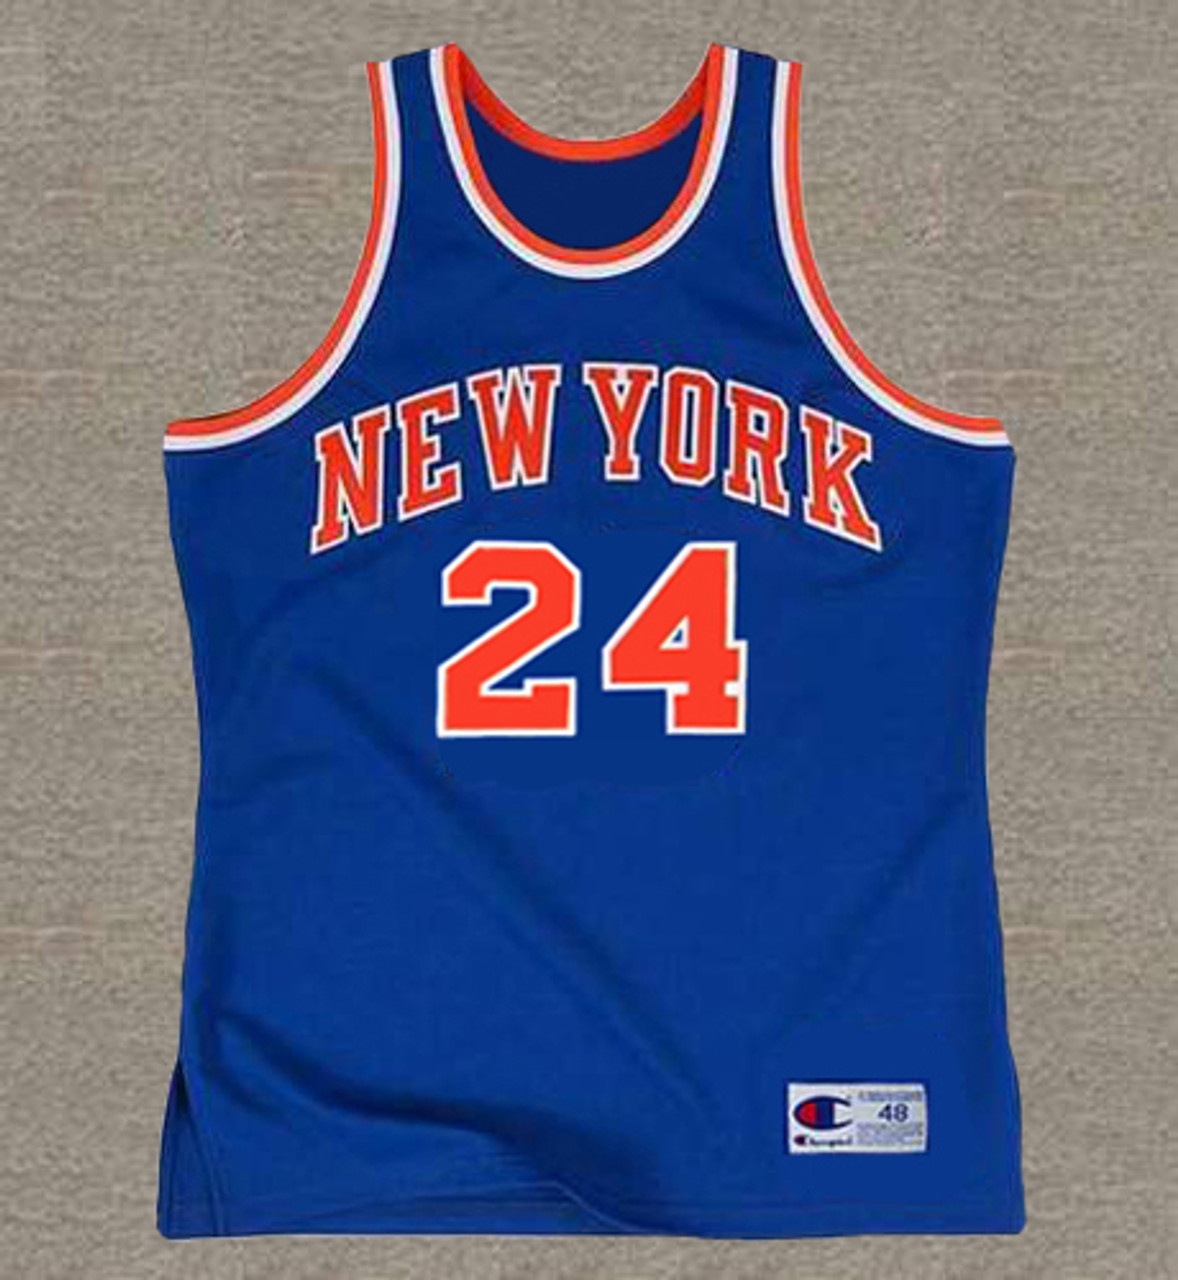 BILL BRADLEY | New York Knicks 1973 Away Throwback NBA Basketball Jersey